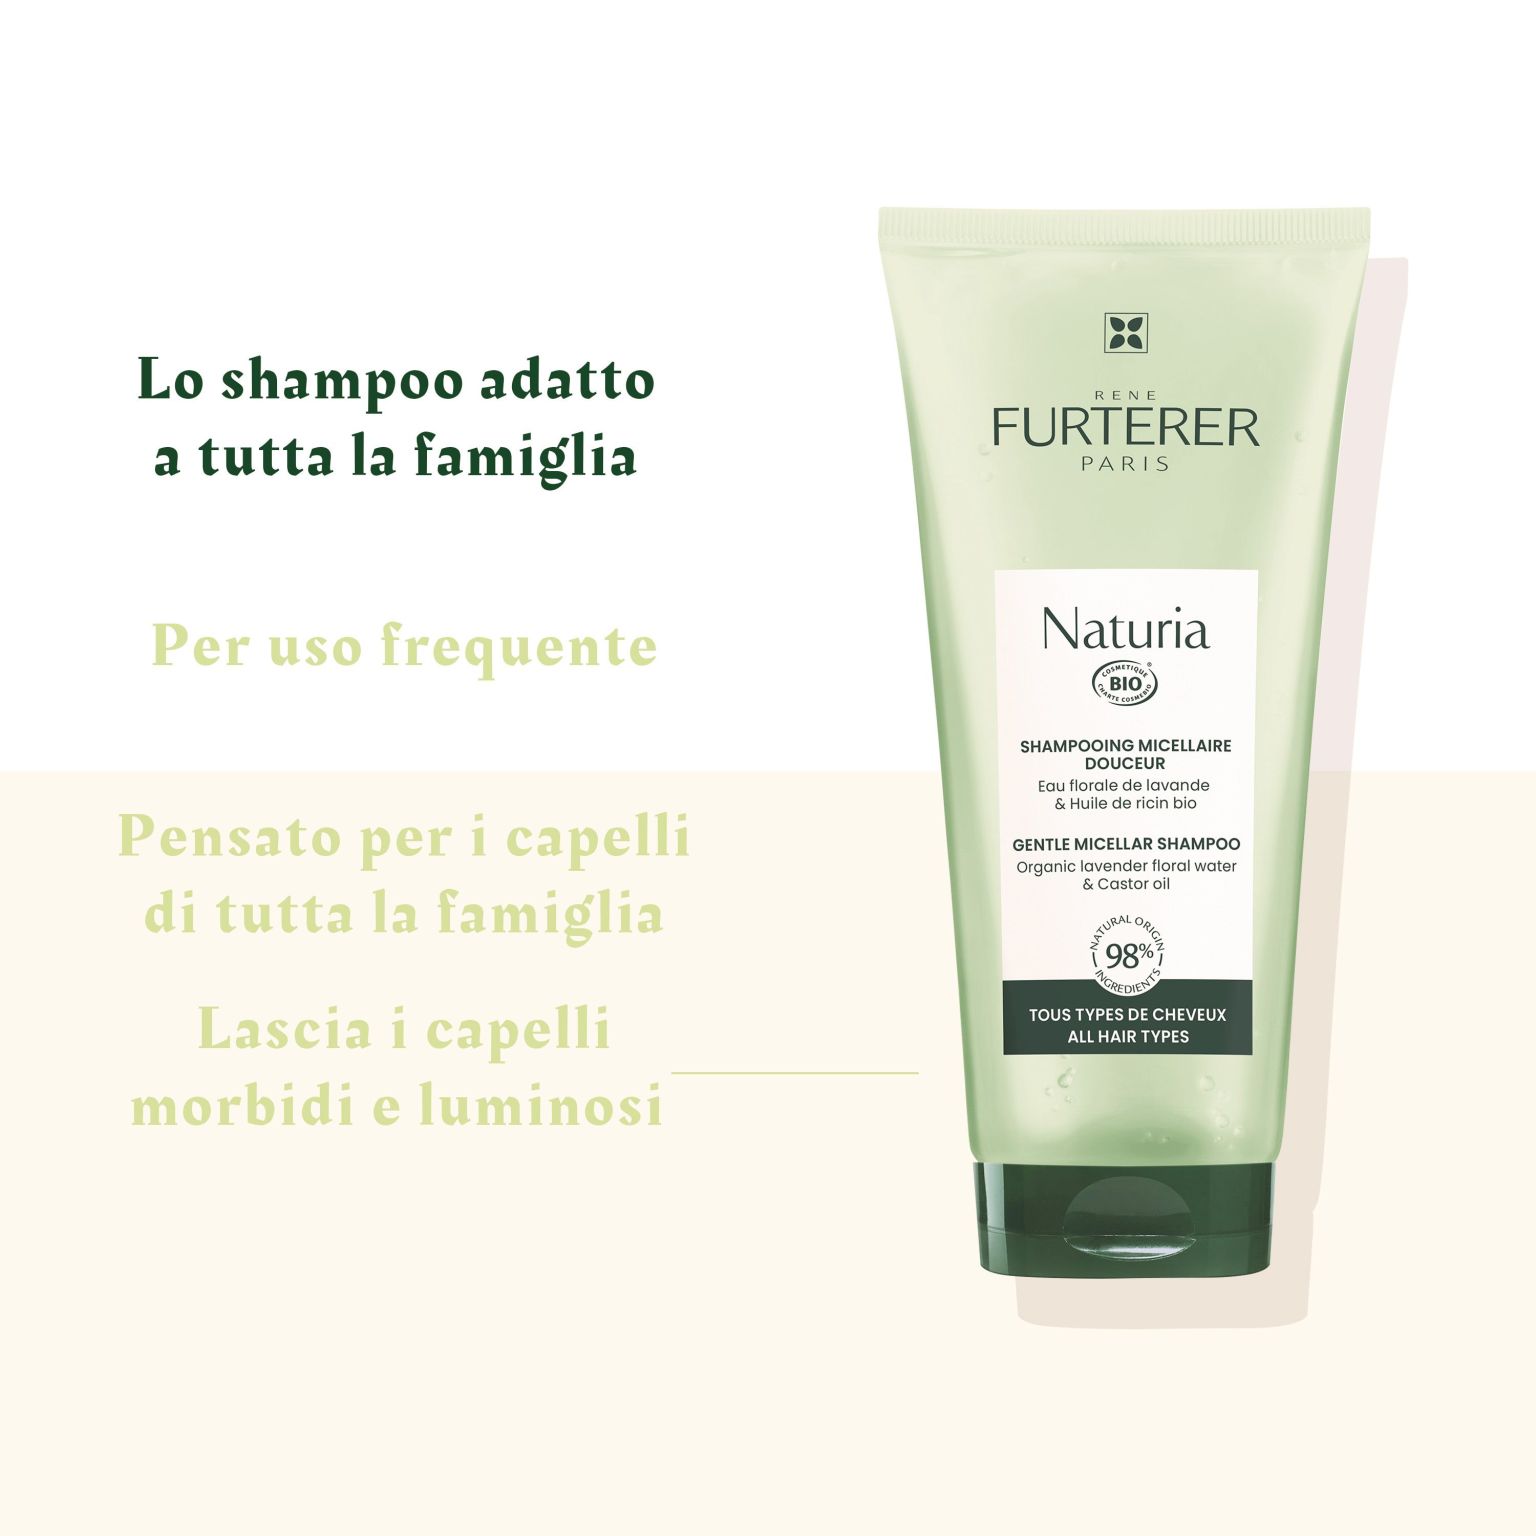 983542869 - René Furterer Naturia Shampoo Micellare delicato 200ml - 4709301_2.jpg